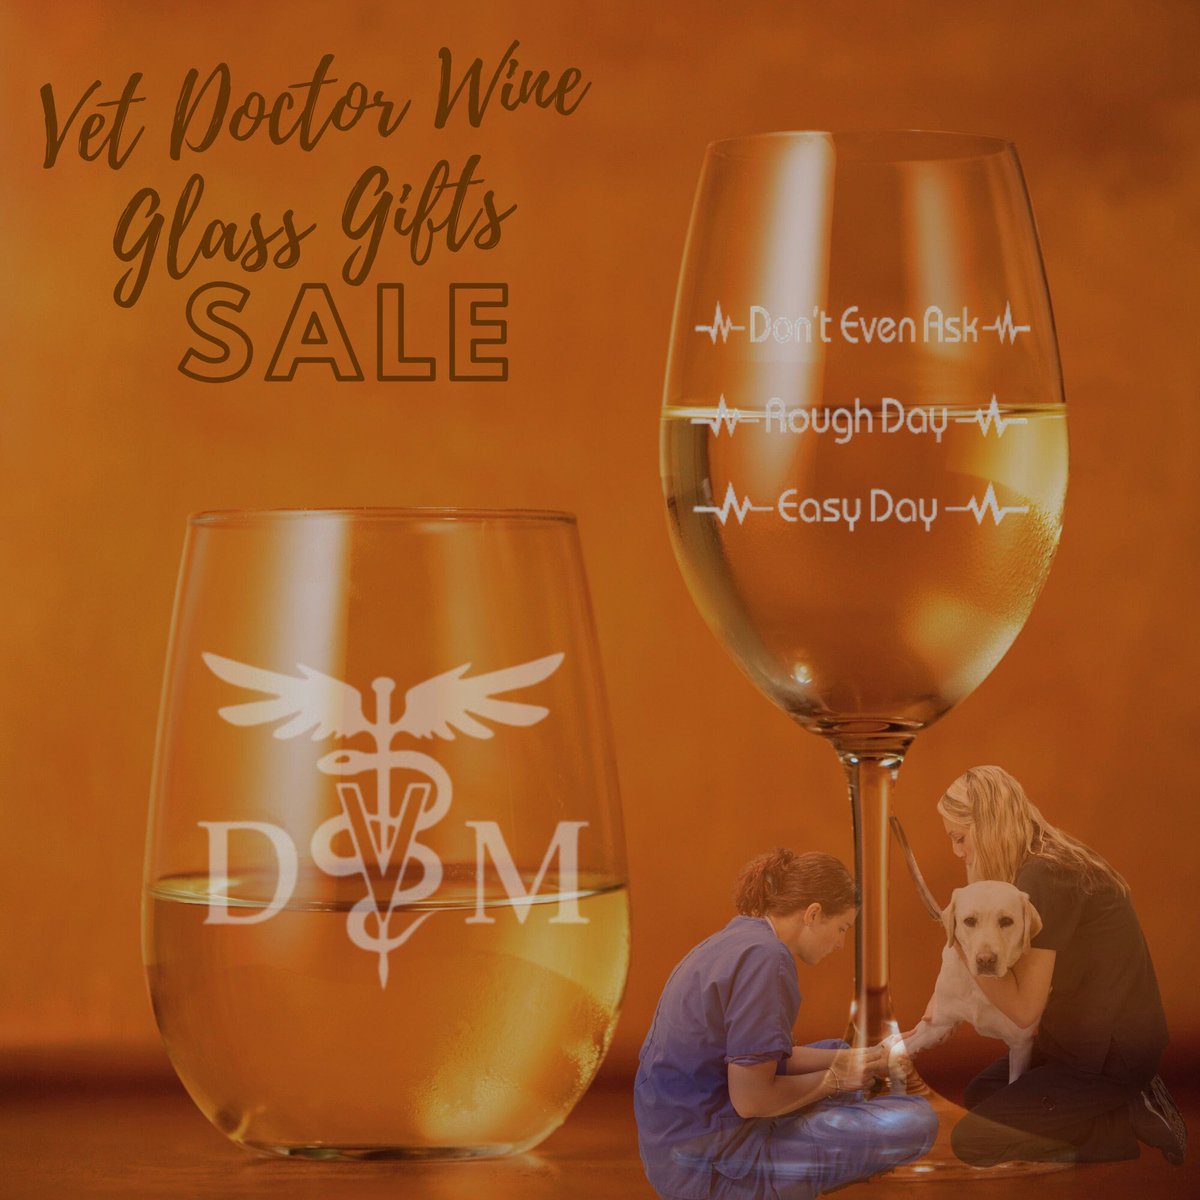 DVM gift stemless wine glasses, DVM glass set for Vet Doctor, doctor of veterinary medicine funny glass Christmas Gifts. Etched Glasses gift etsy.me/43aSeqM #Veterinariangift #Vethospital #stemlesswineglass #birthdaygift #engravedglass #personalizedgifts